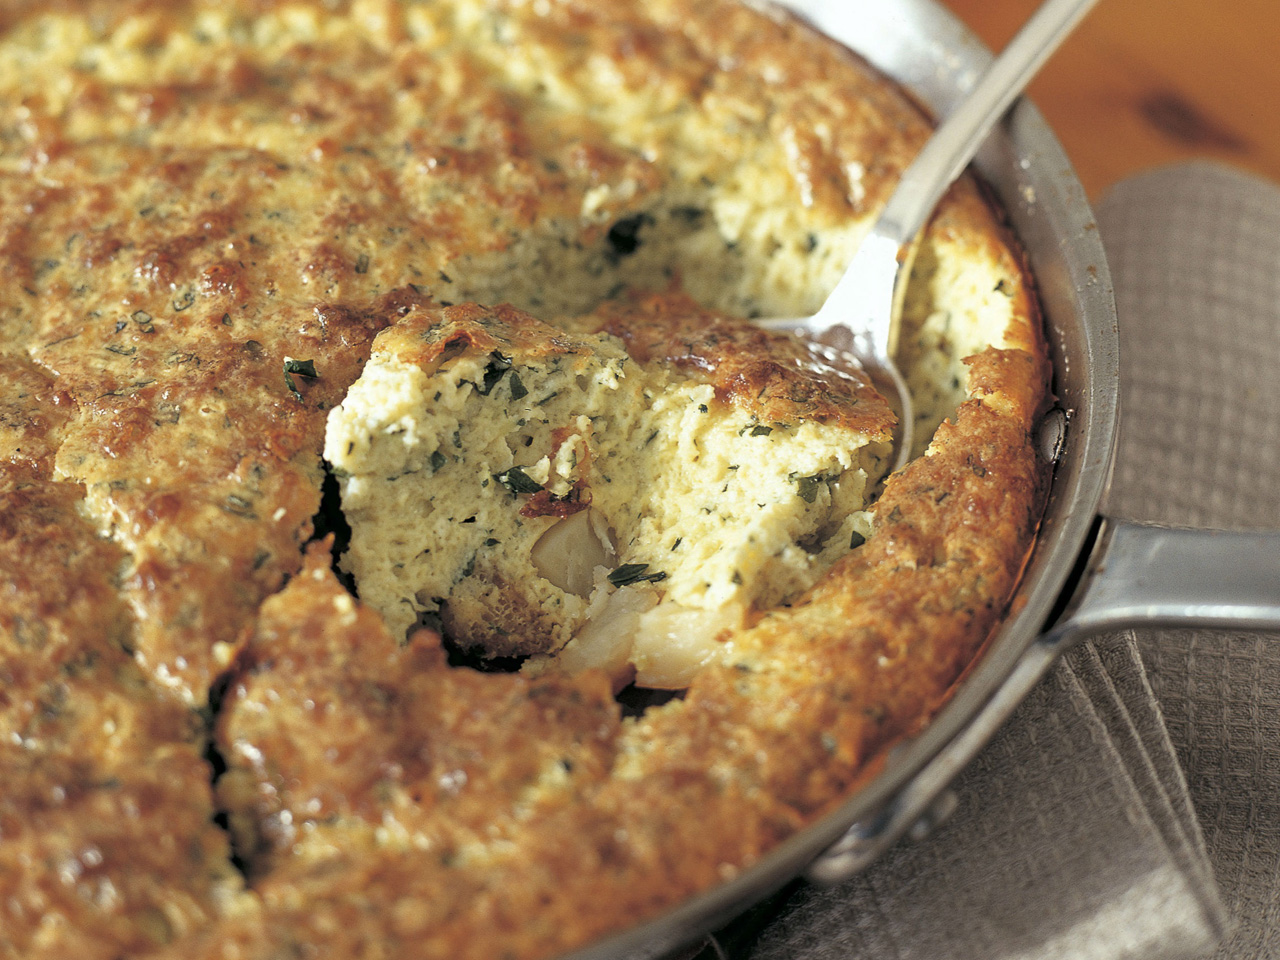 How do you make Ina Garten's potato casserole?